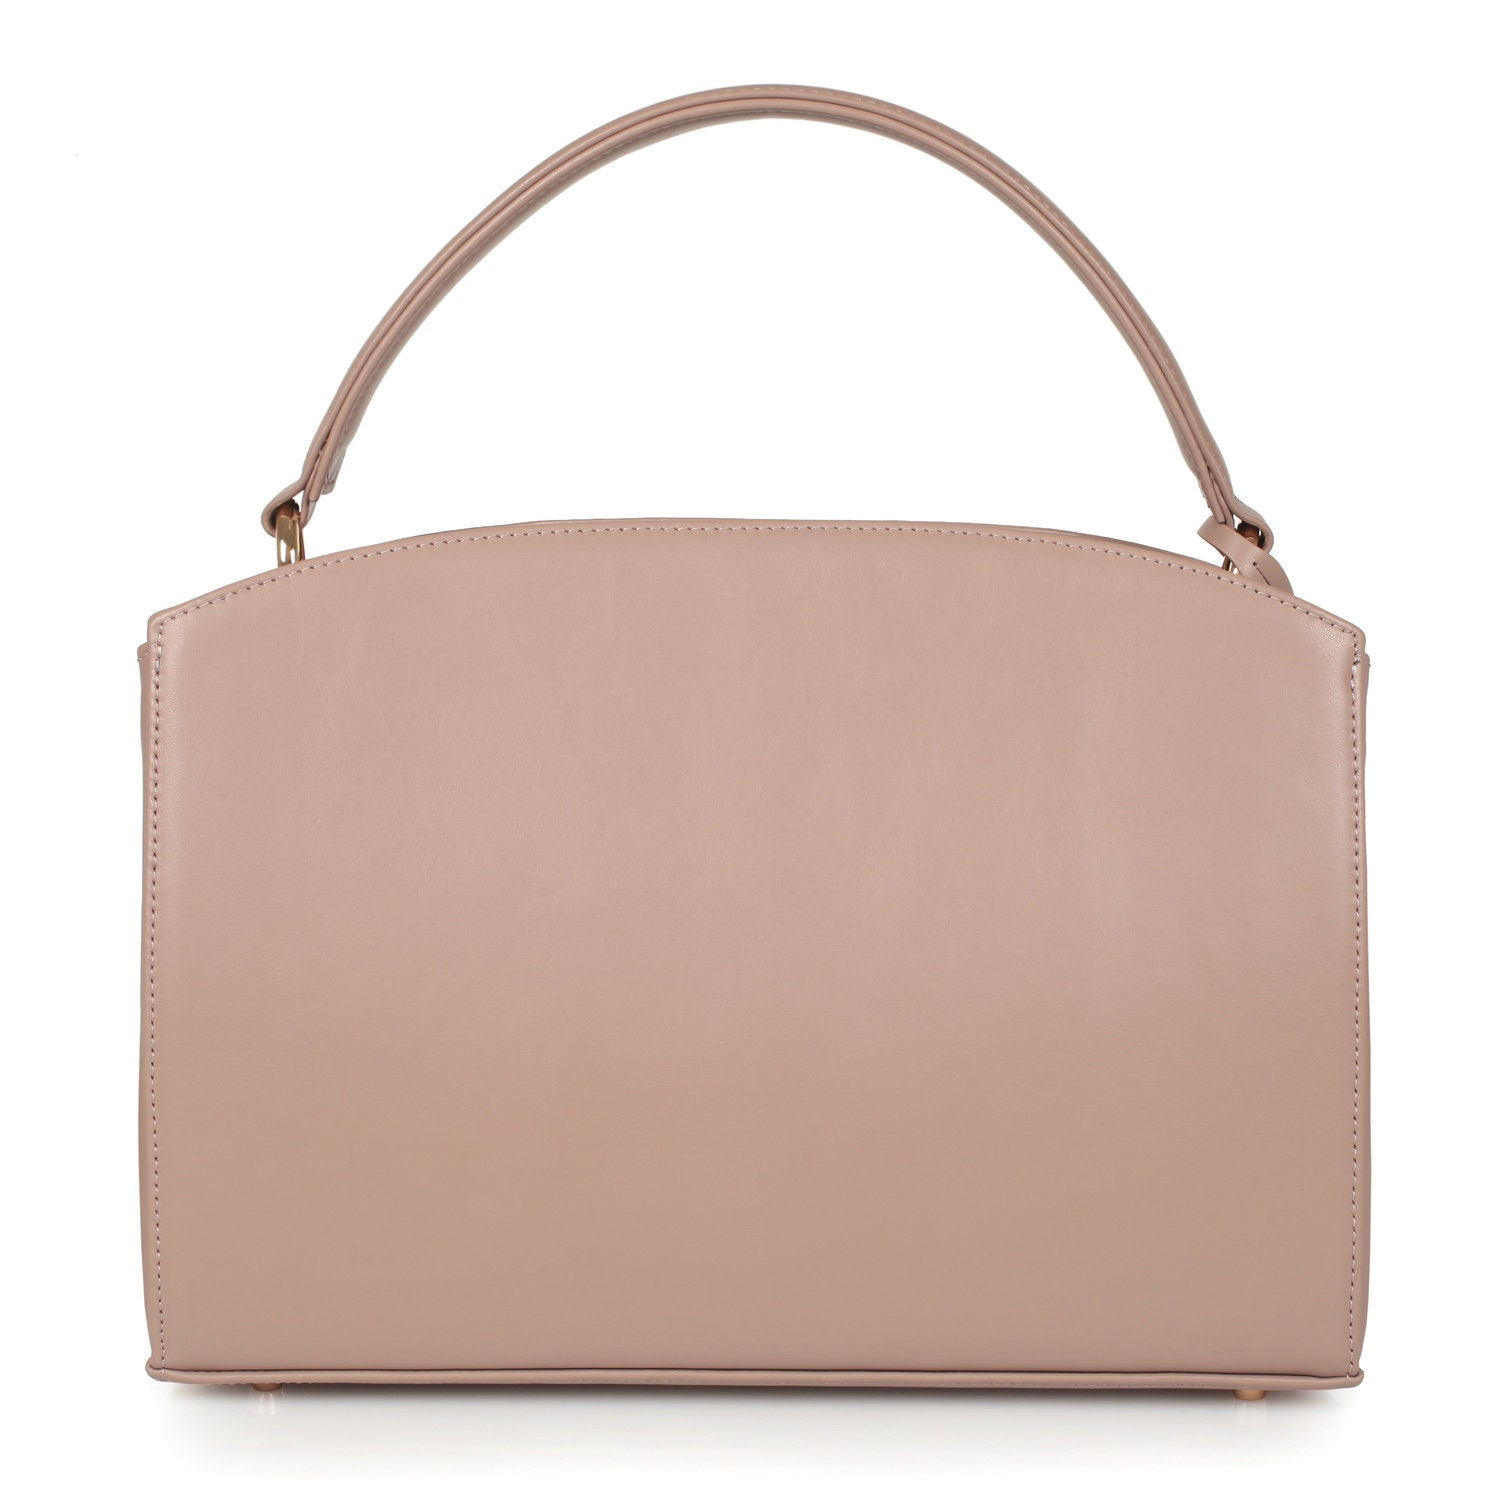 Leather Top Handle Bag Beige Pink Leather Handbag Top Handle | Etsy